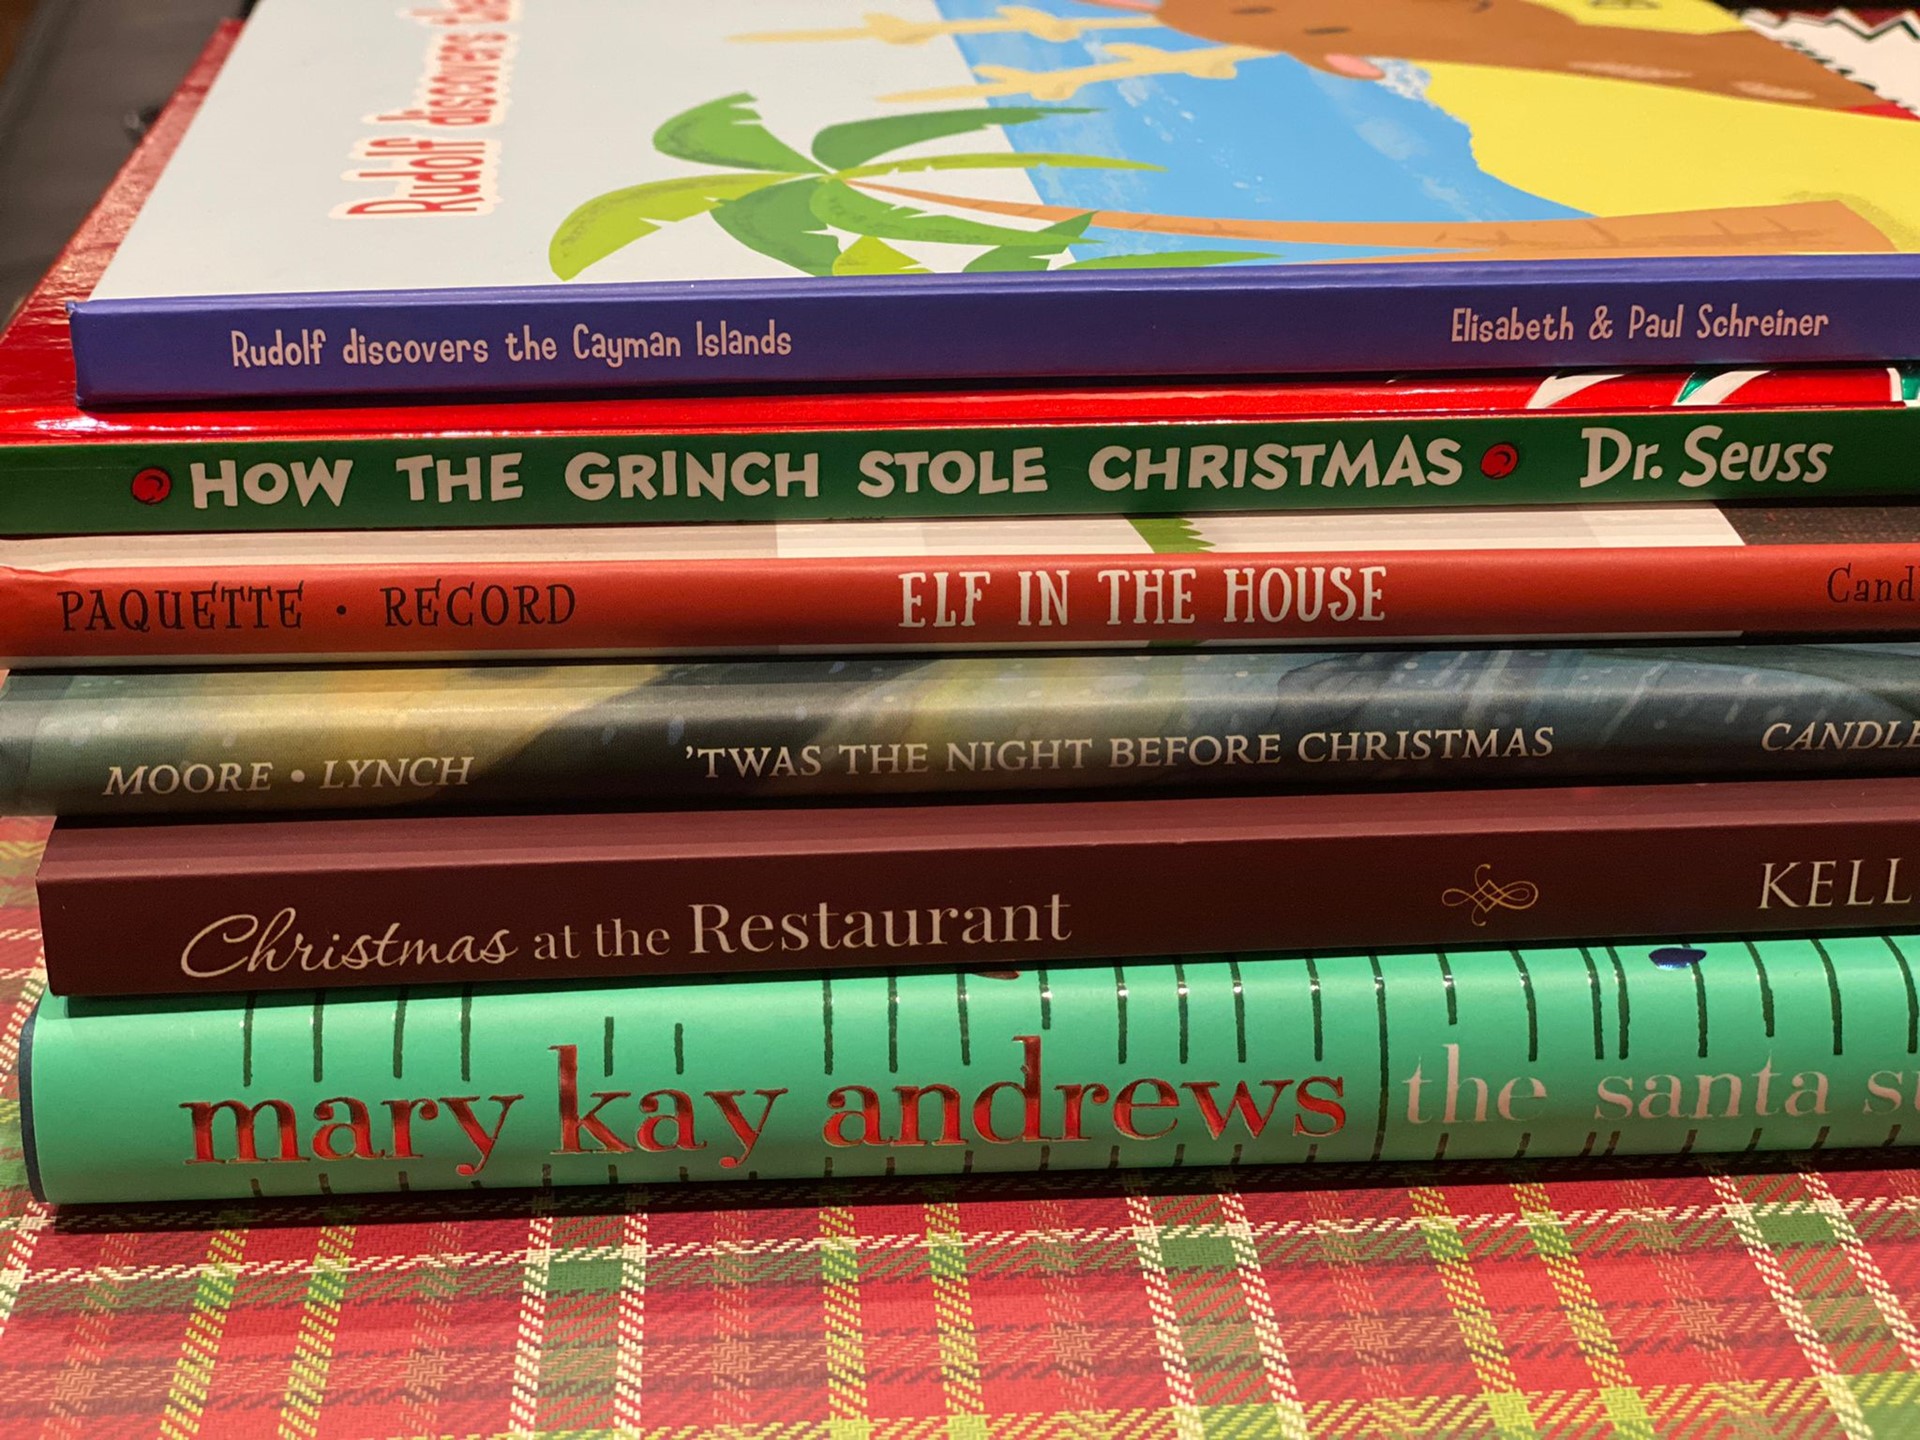 Book talk: Joyous Christmas reads